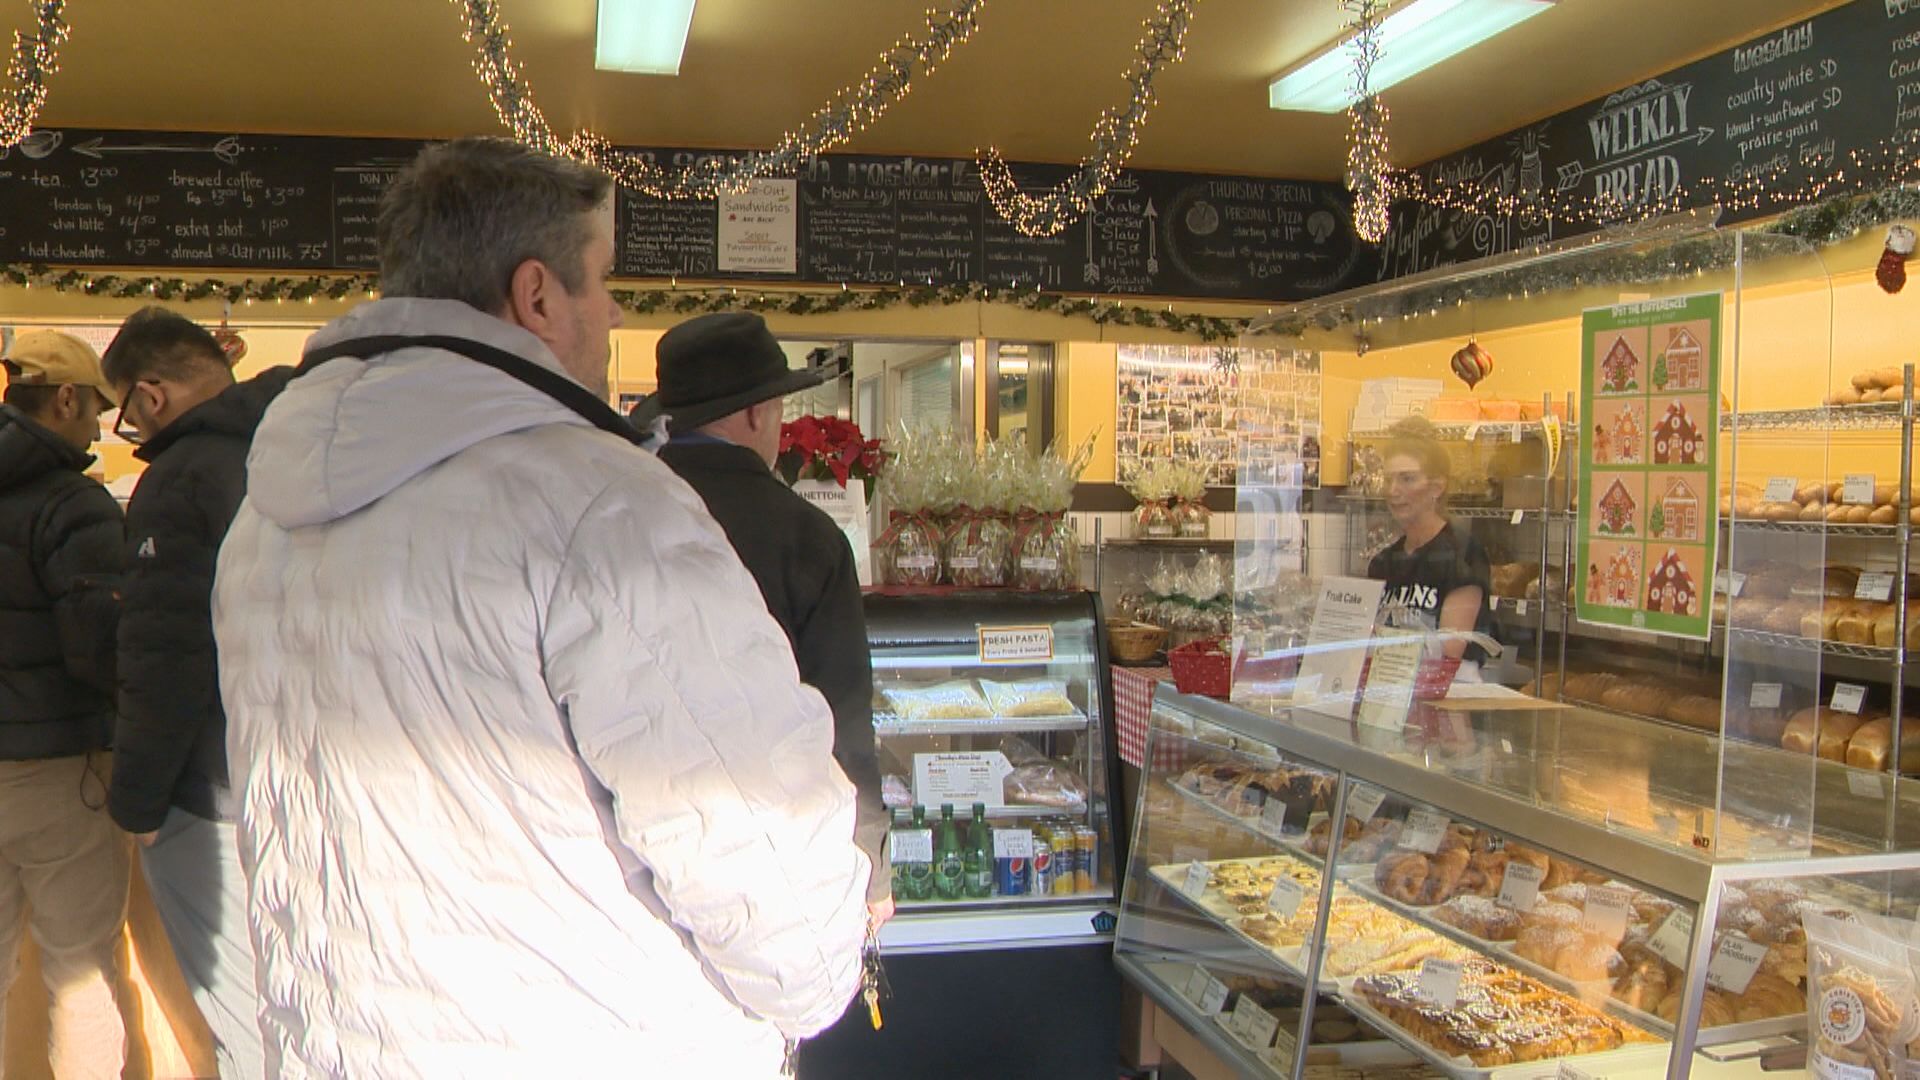 ‘Stressful’ sugar shortage affecting Saskatchewan bakery